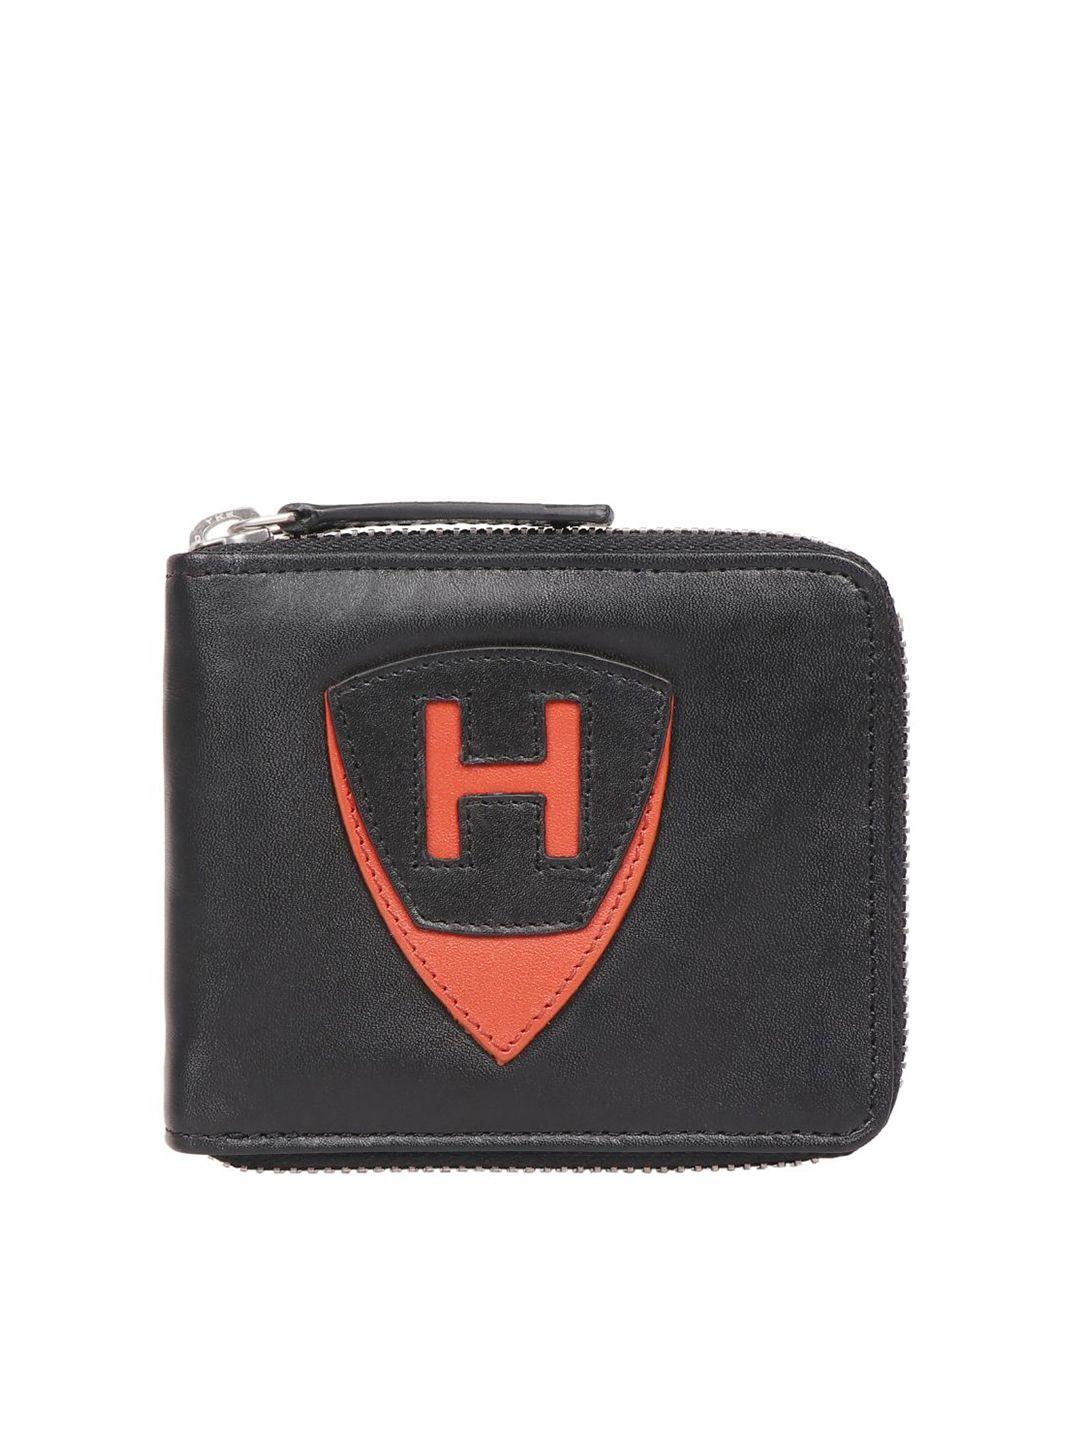 hidesign men black leather zip around wallet